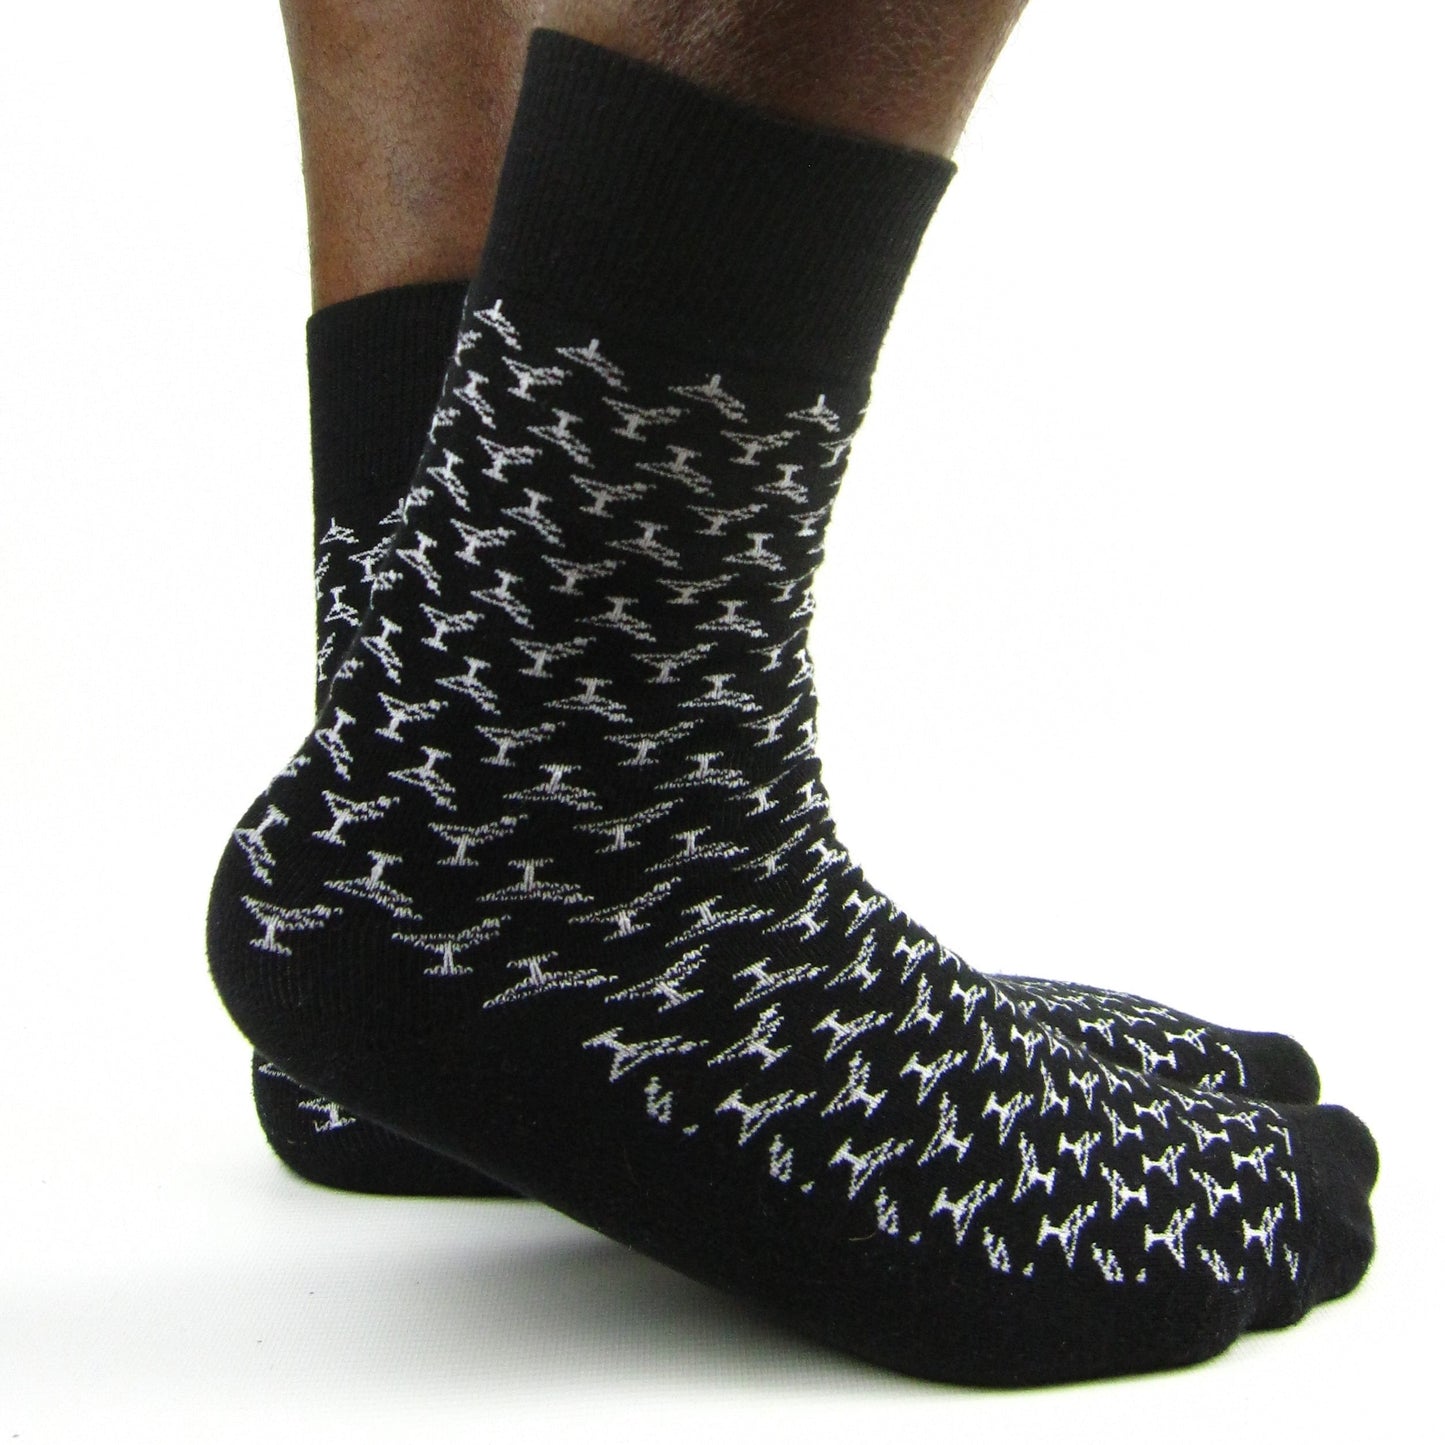 Luv Socks Men's Cotton Blend Martini Print Ankle Socks - Leggsbeautiful